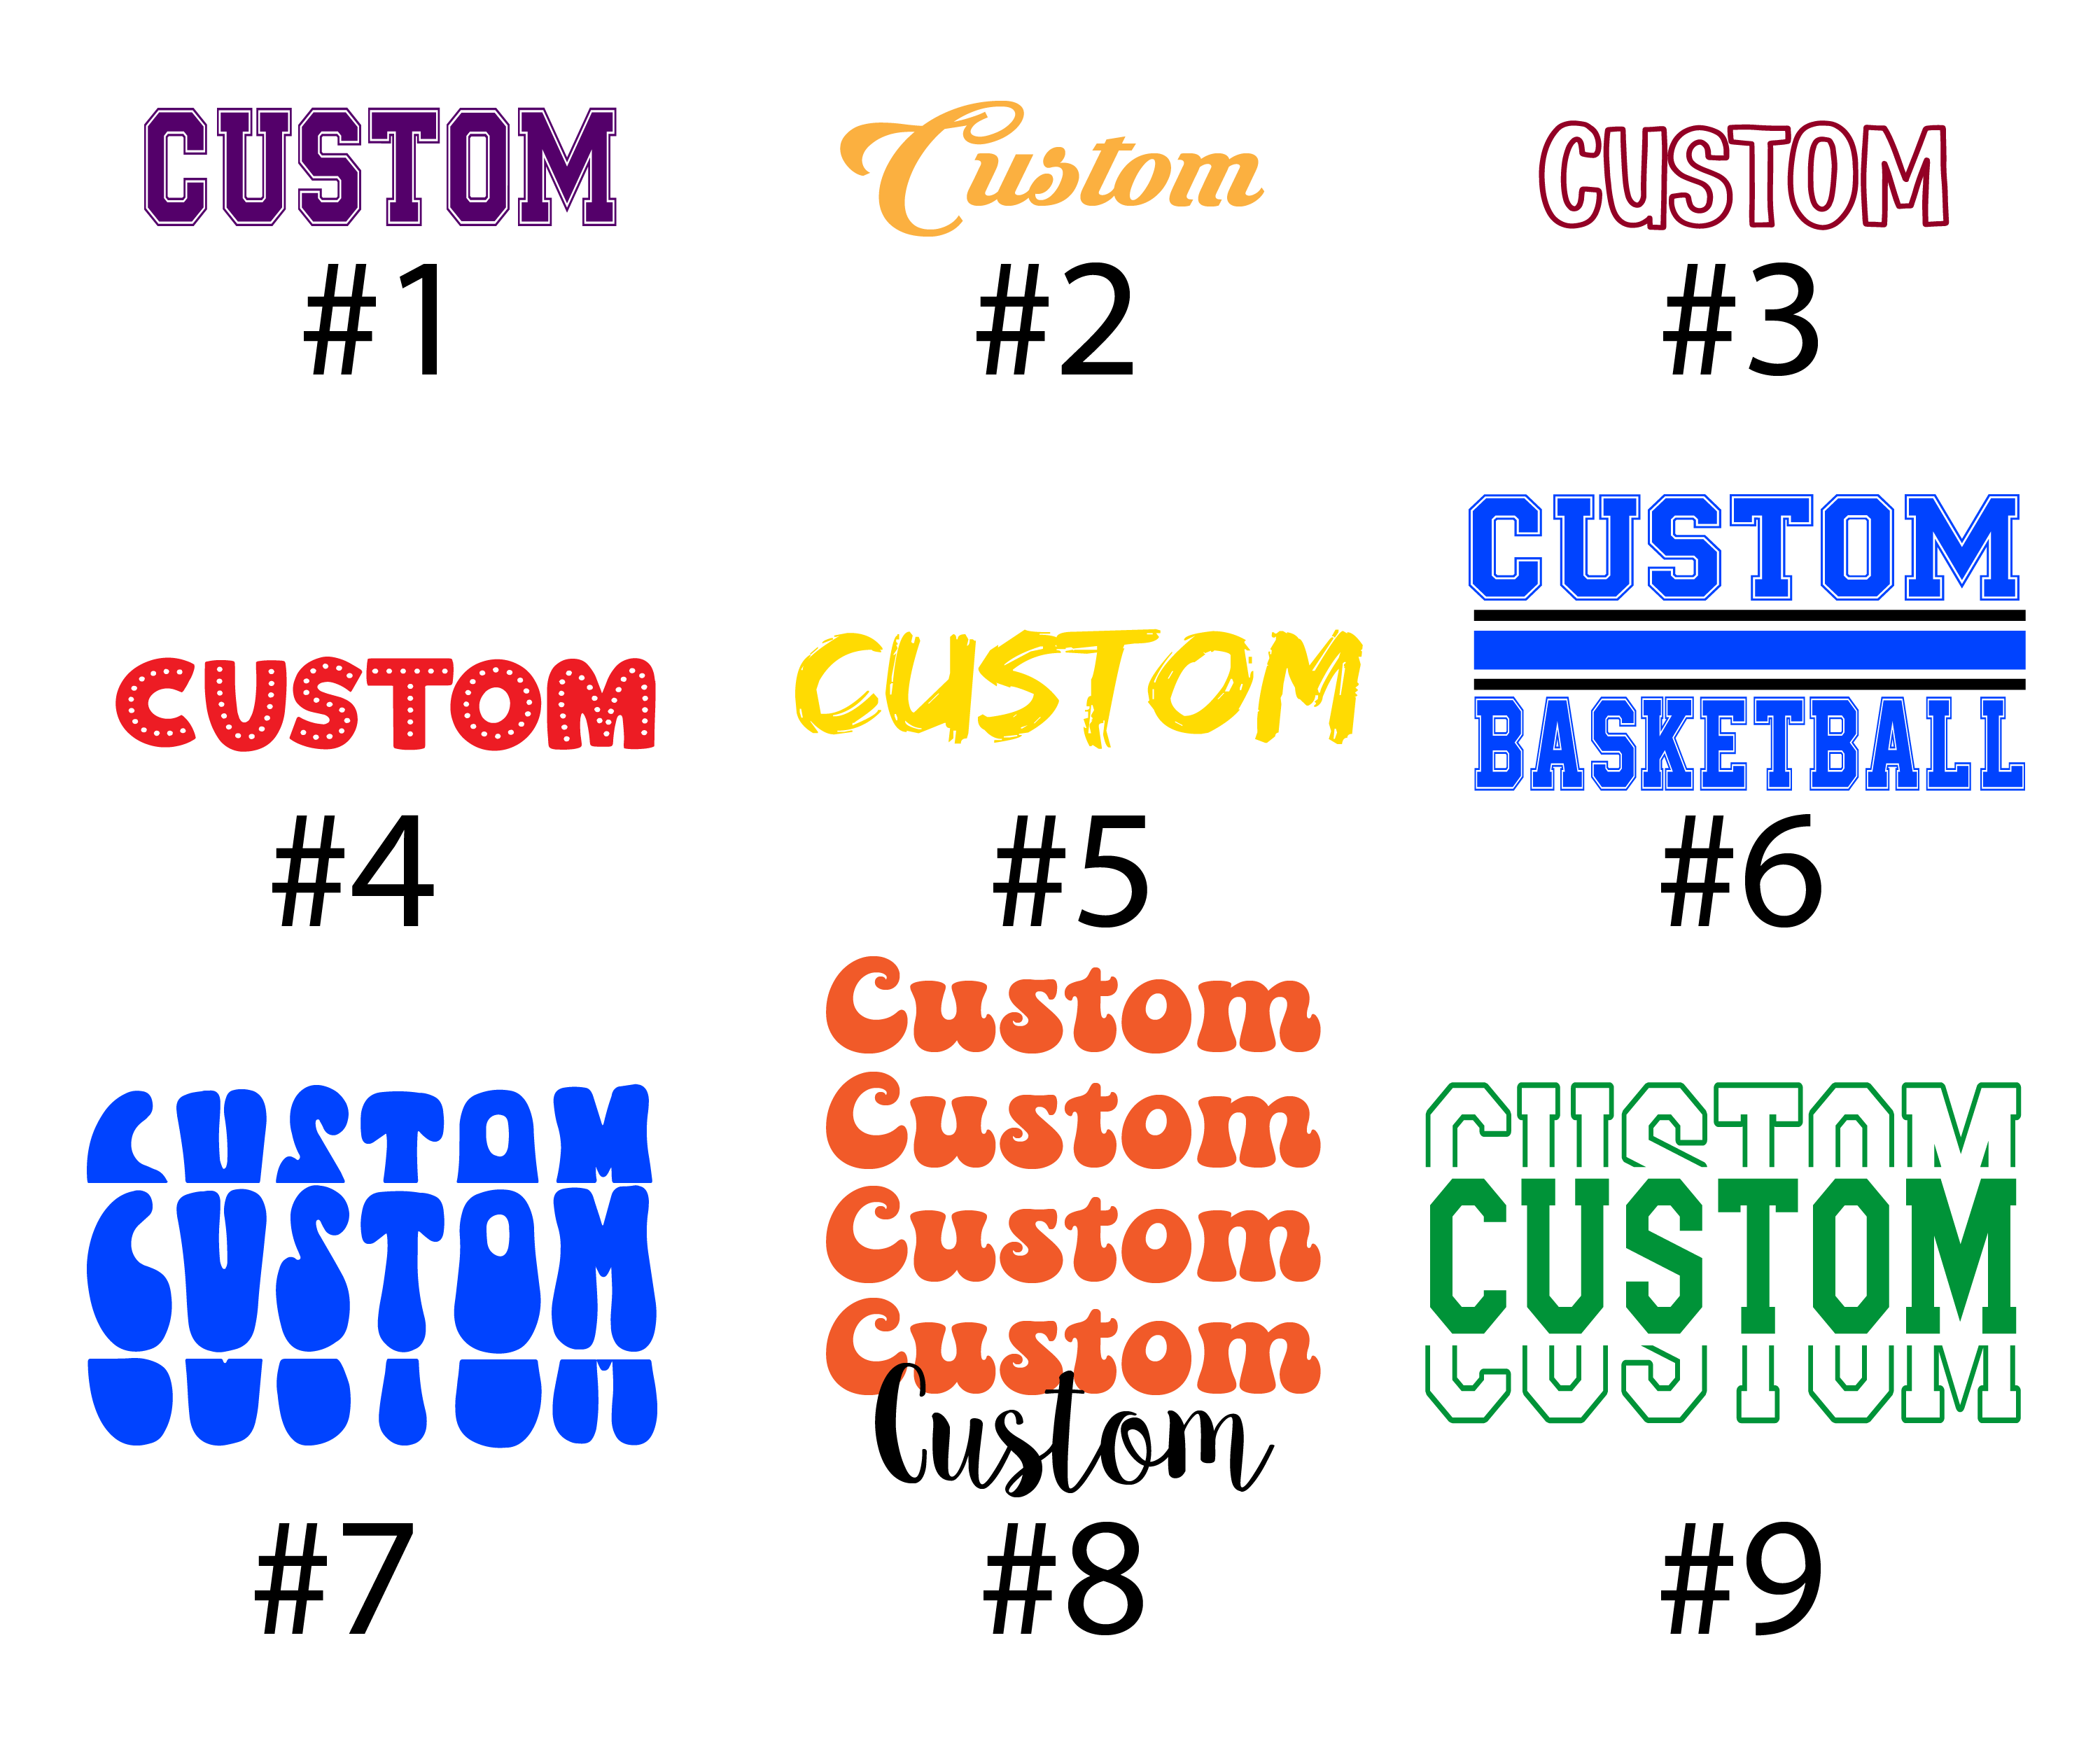 Custom Mascot School Shirt Name Shirt Personalized Colors Student Teacher Grade Middle High